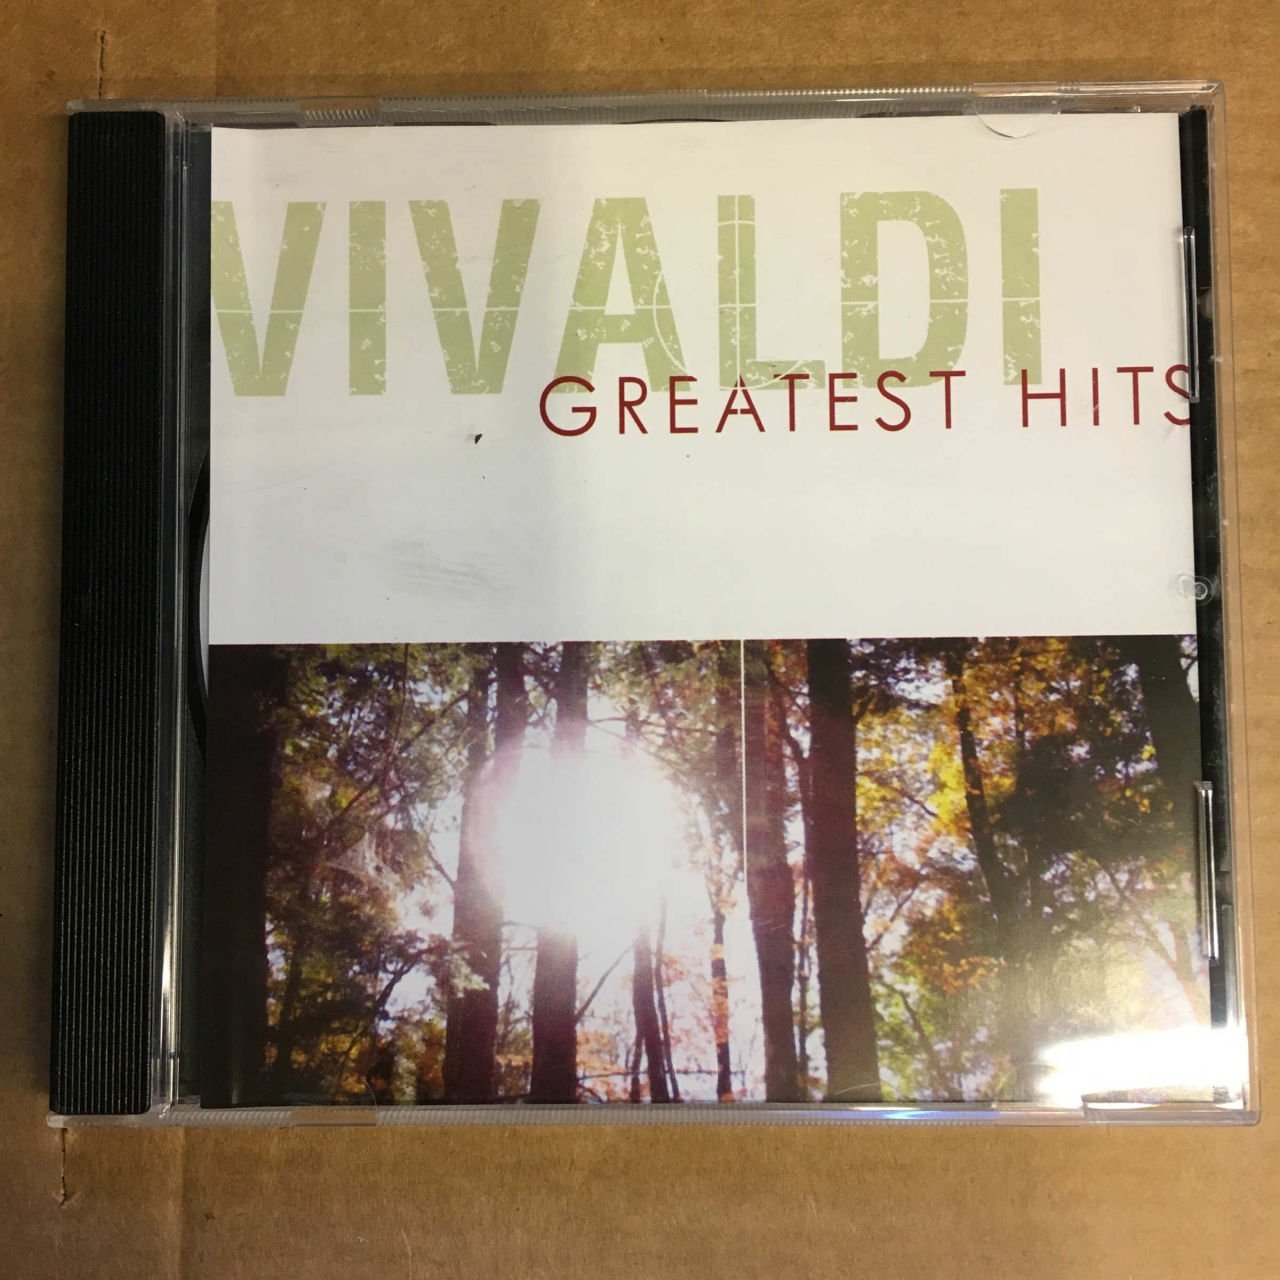 vivaldi best recordings